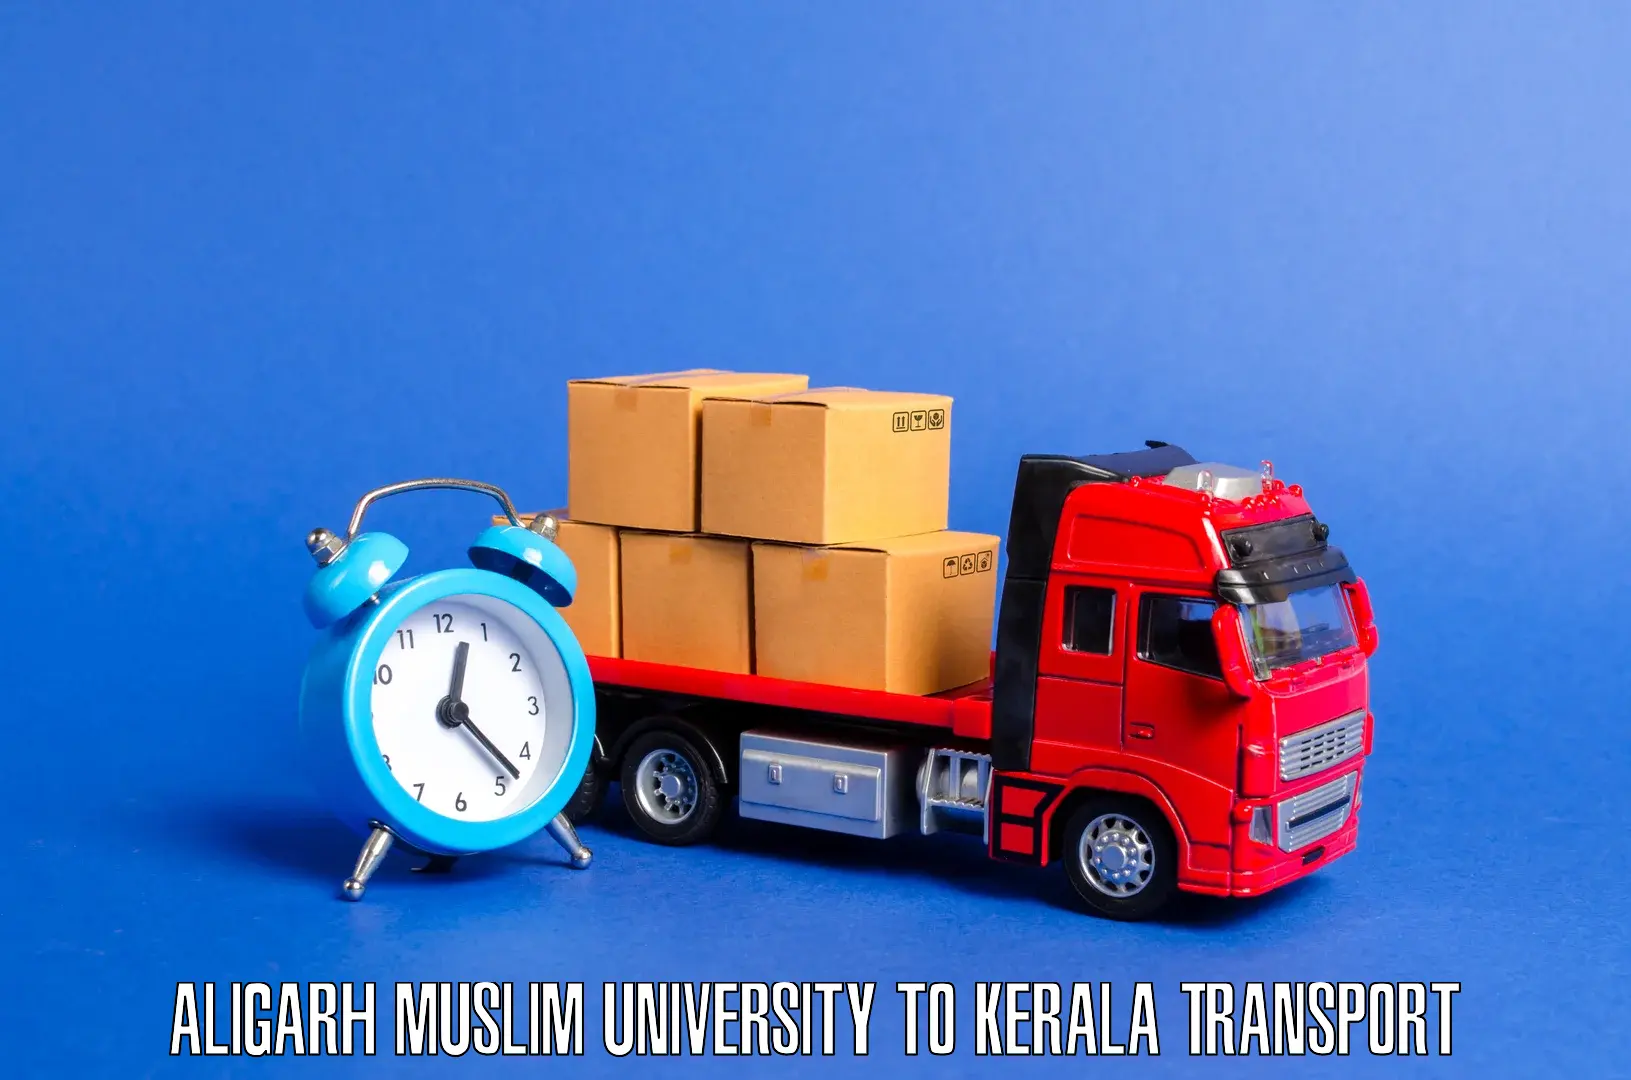 Goods delivery service Aligarh Muslim University to Calicut University Malappuram